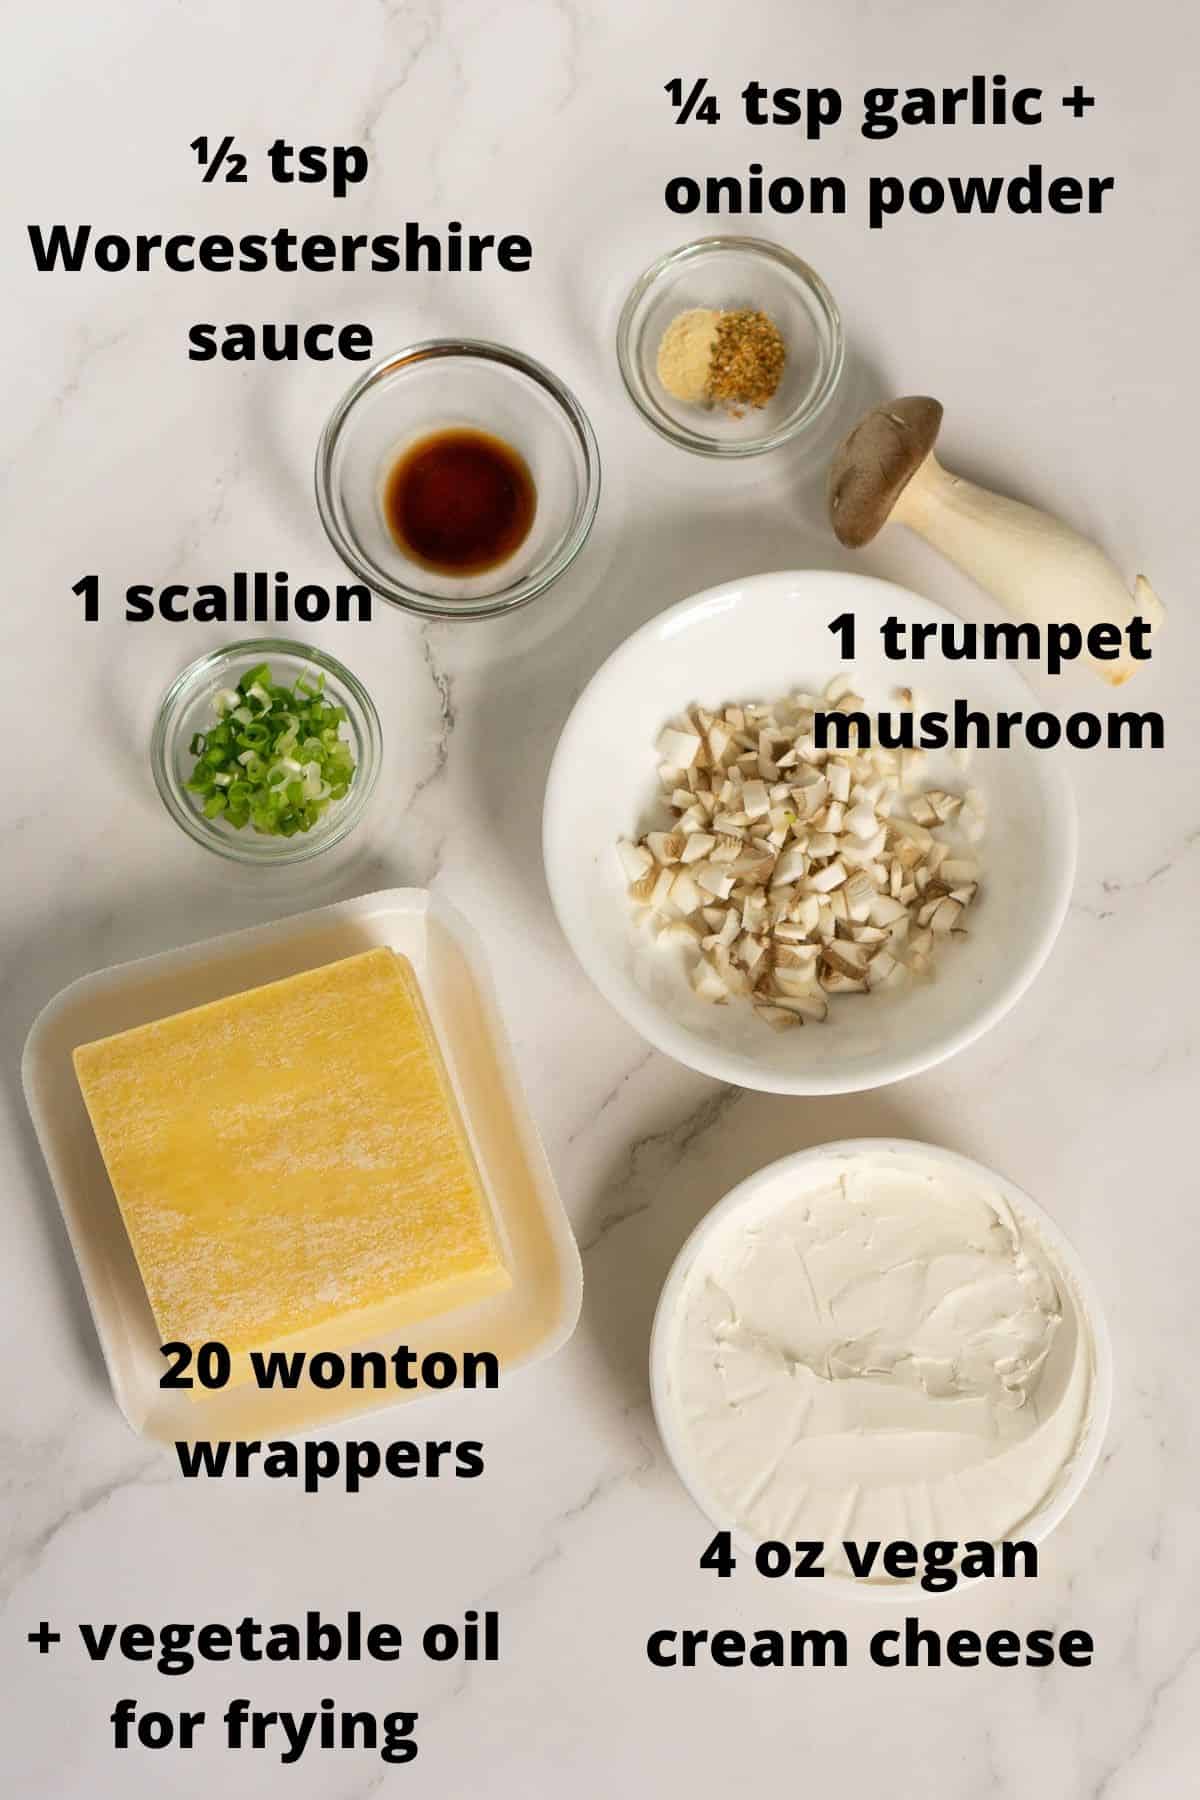 Ingredients to make vegan crab rangoon: wontons, vegan cream cheese, trumpet mushroom, scallion, Worcestershire sauce, spices.